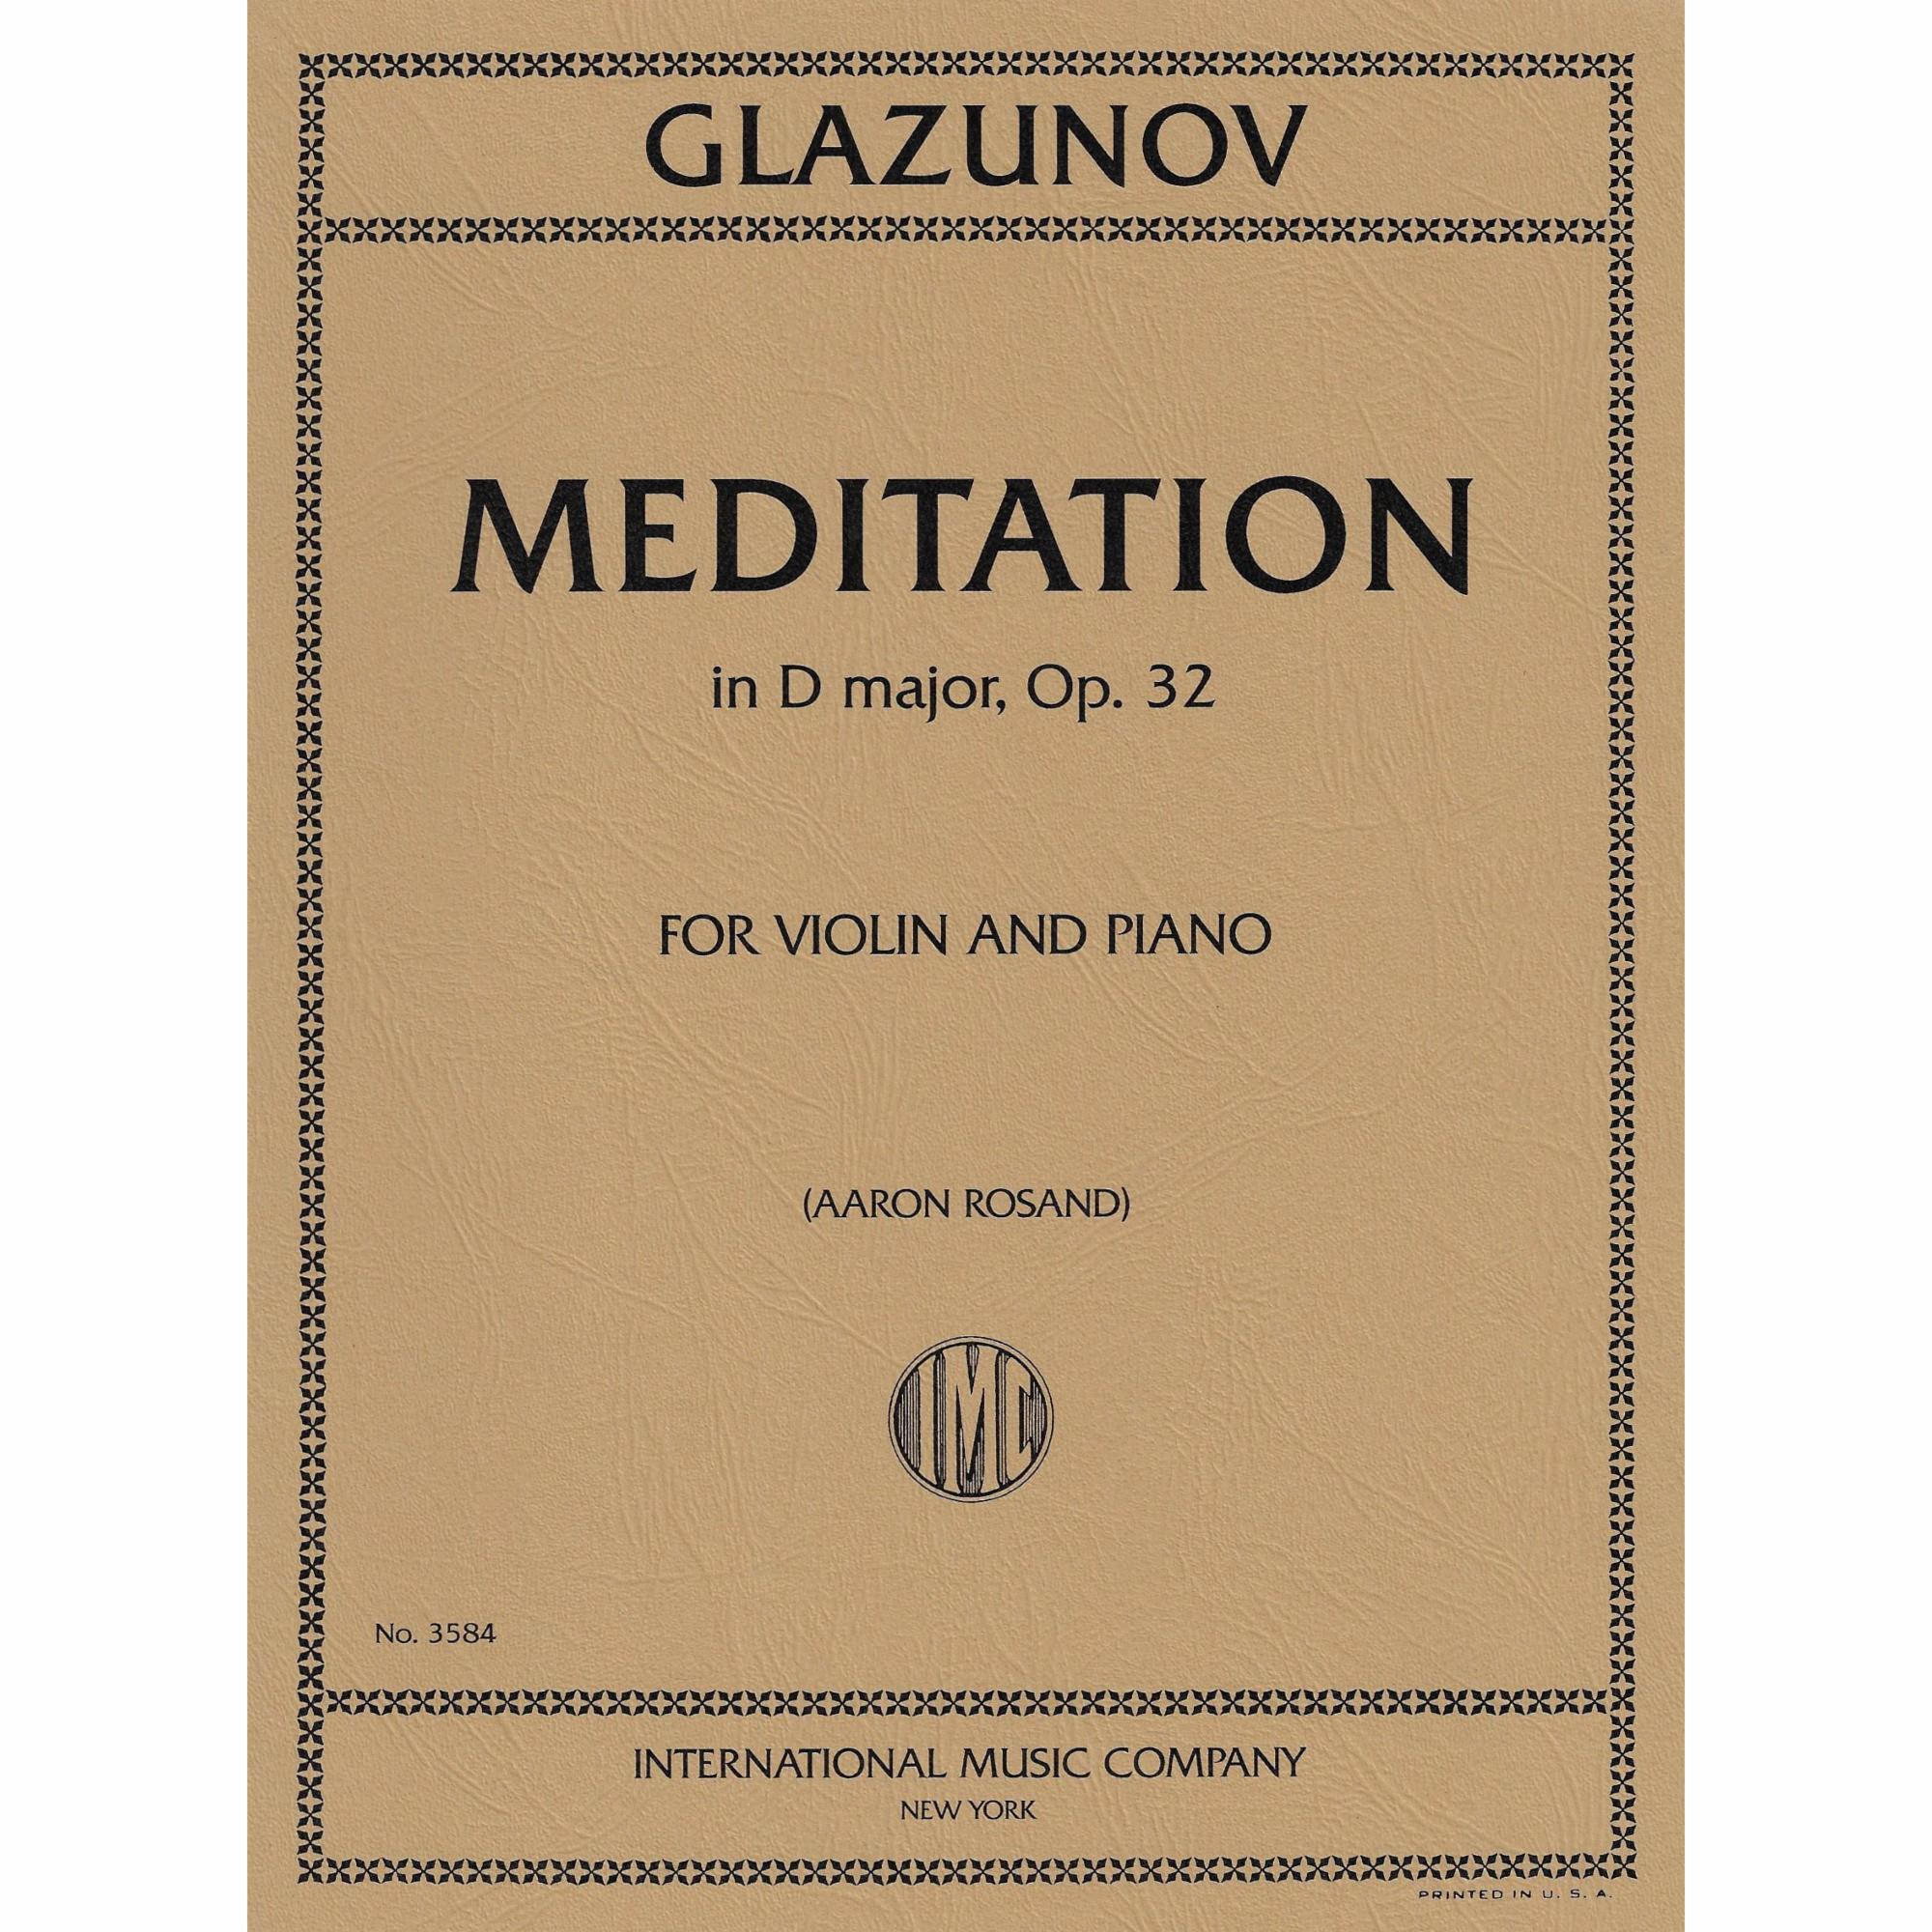 Glazunov -- Meditation in D Major, Op. 32 for Violin and Piano